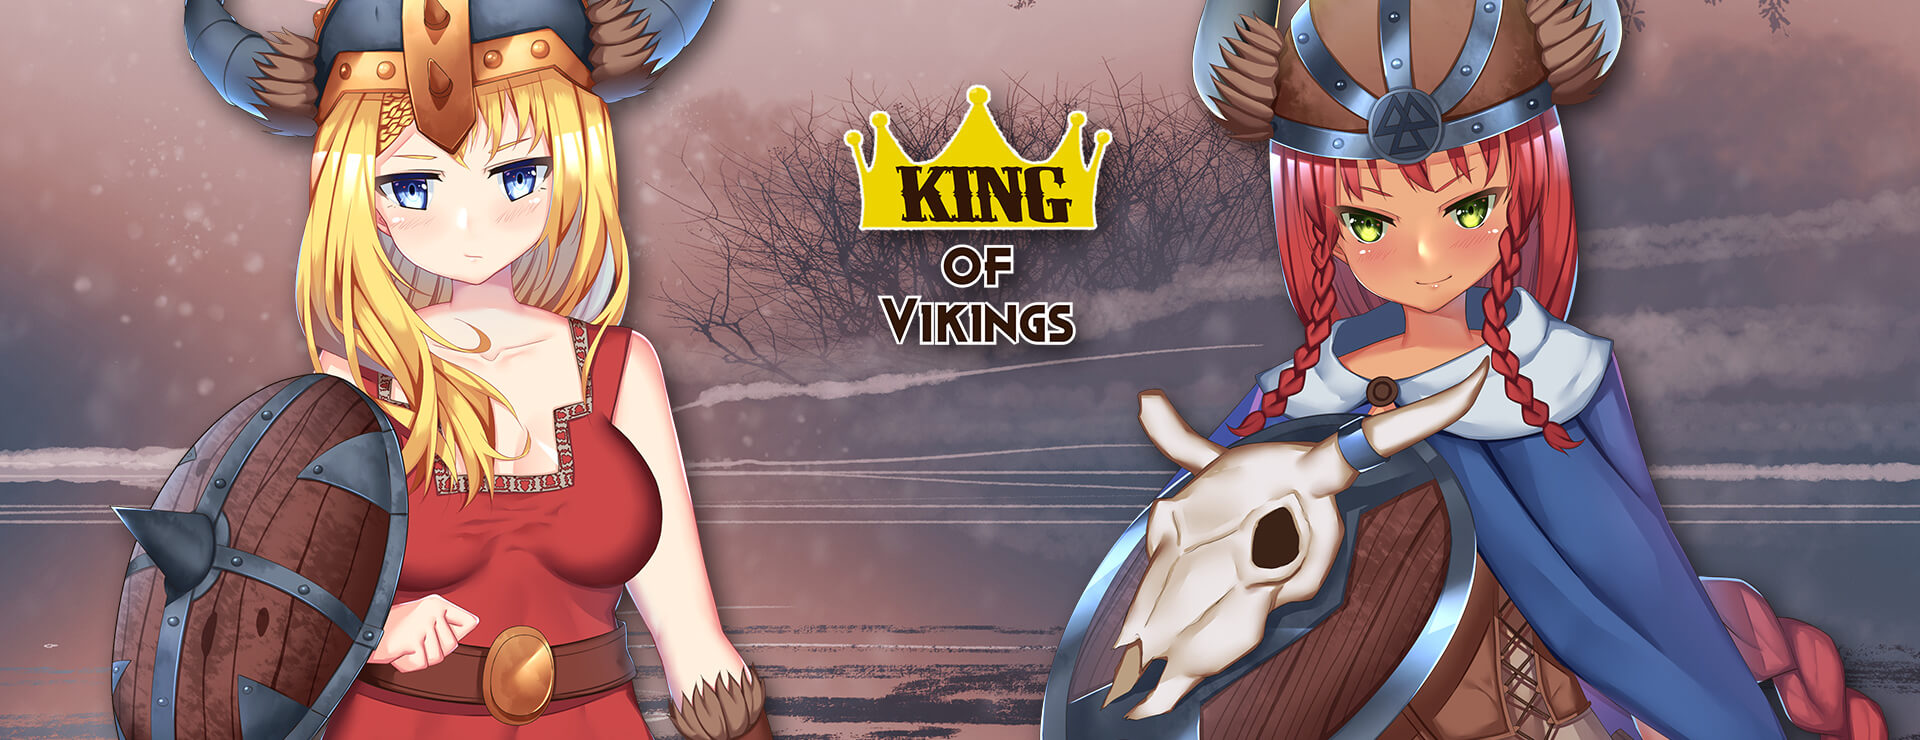 King of Vikings - Visual Novel Game